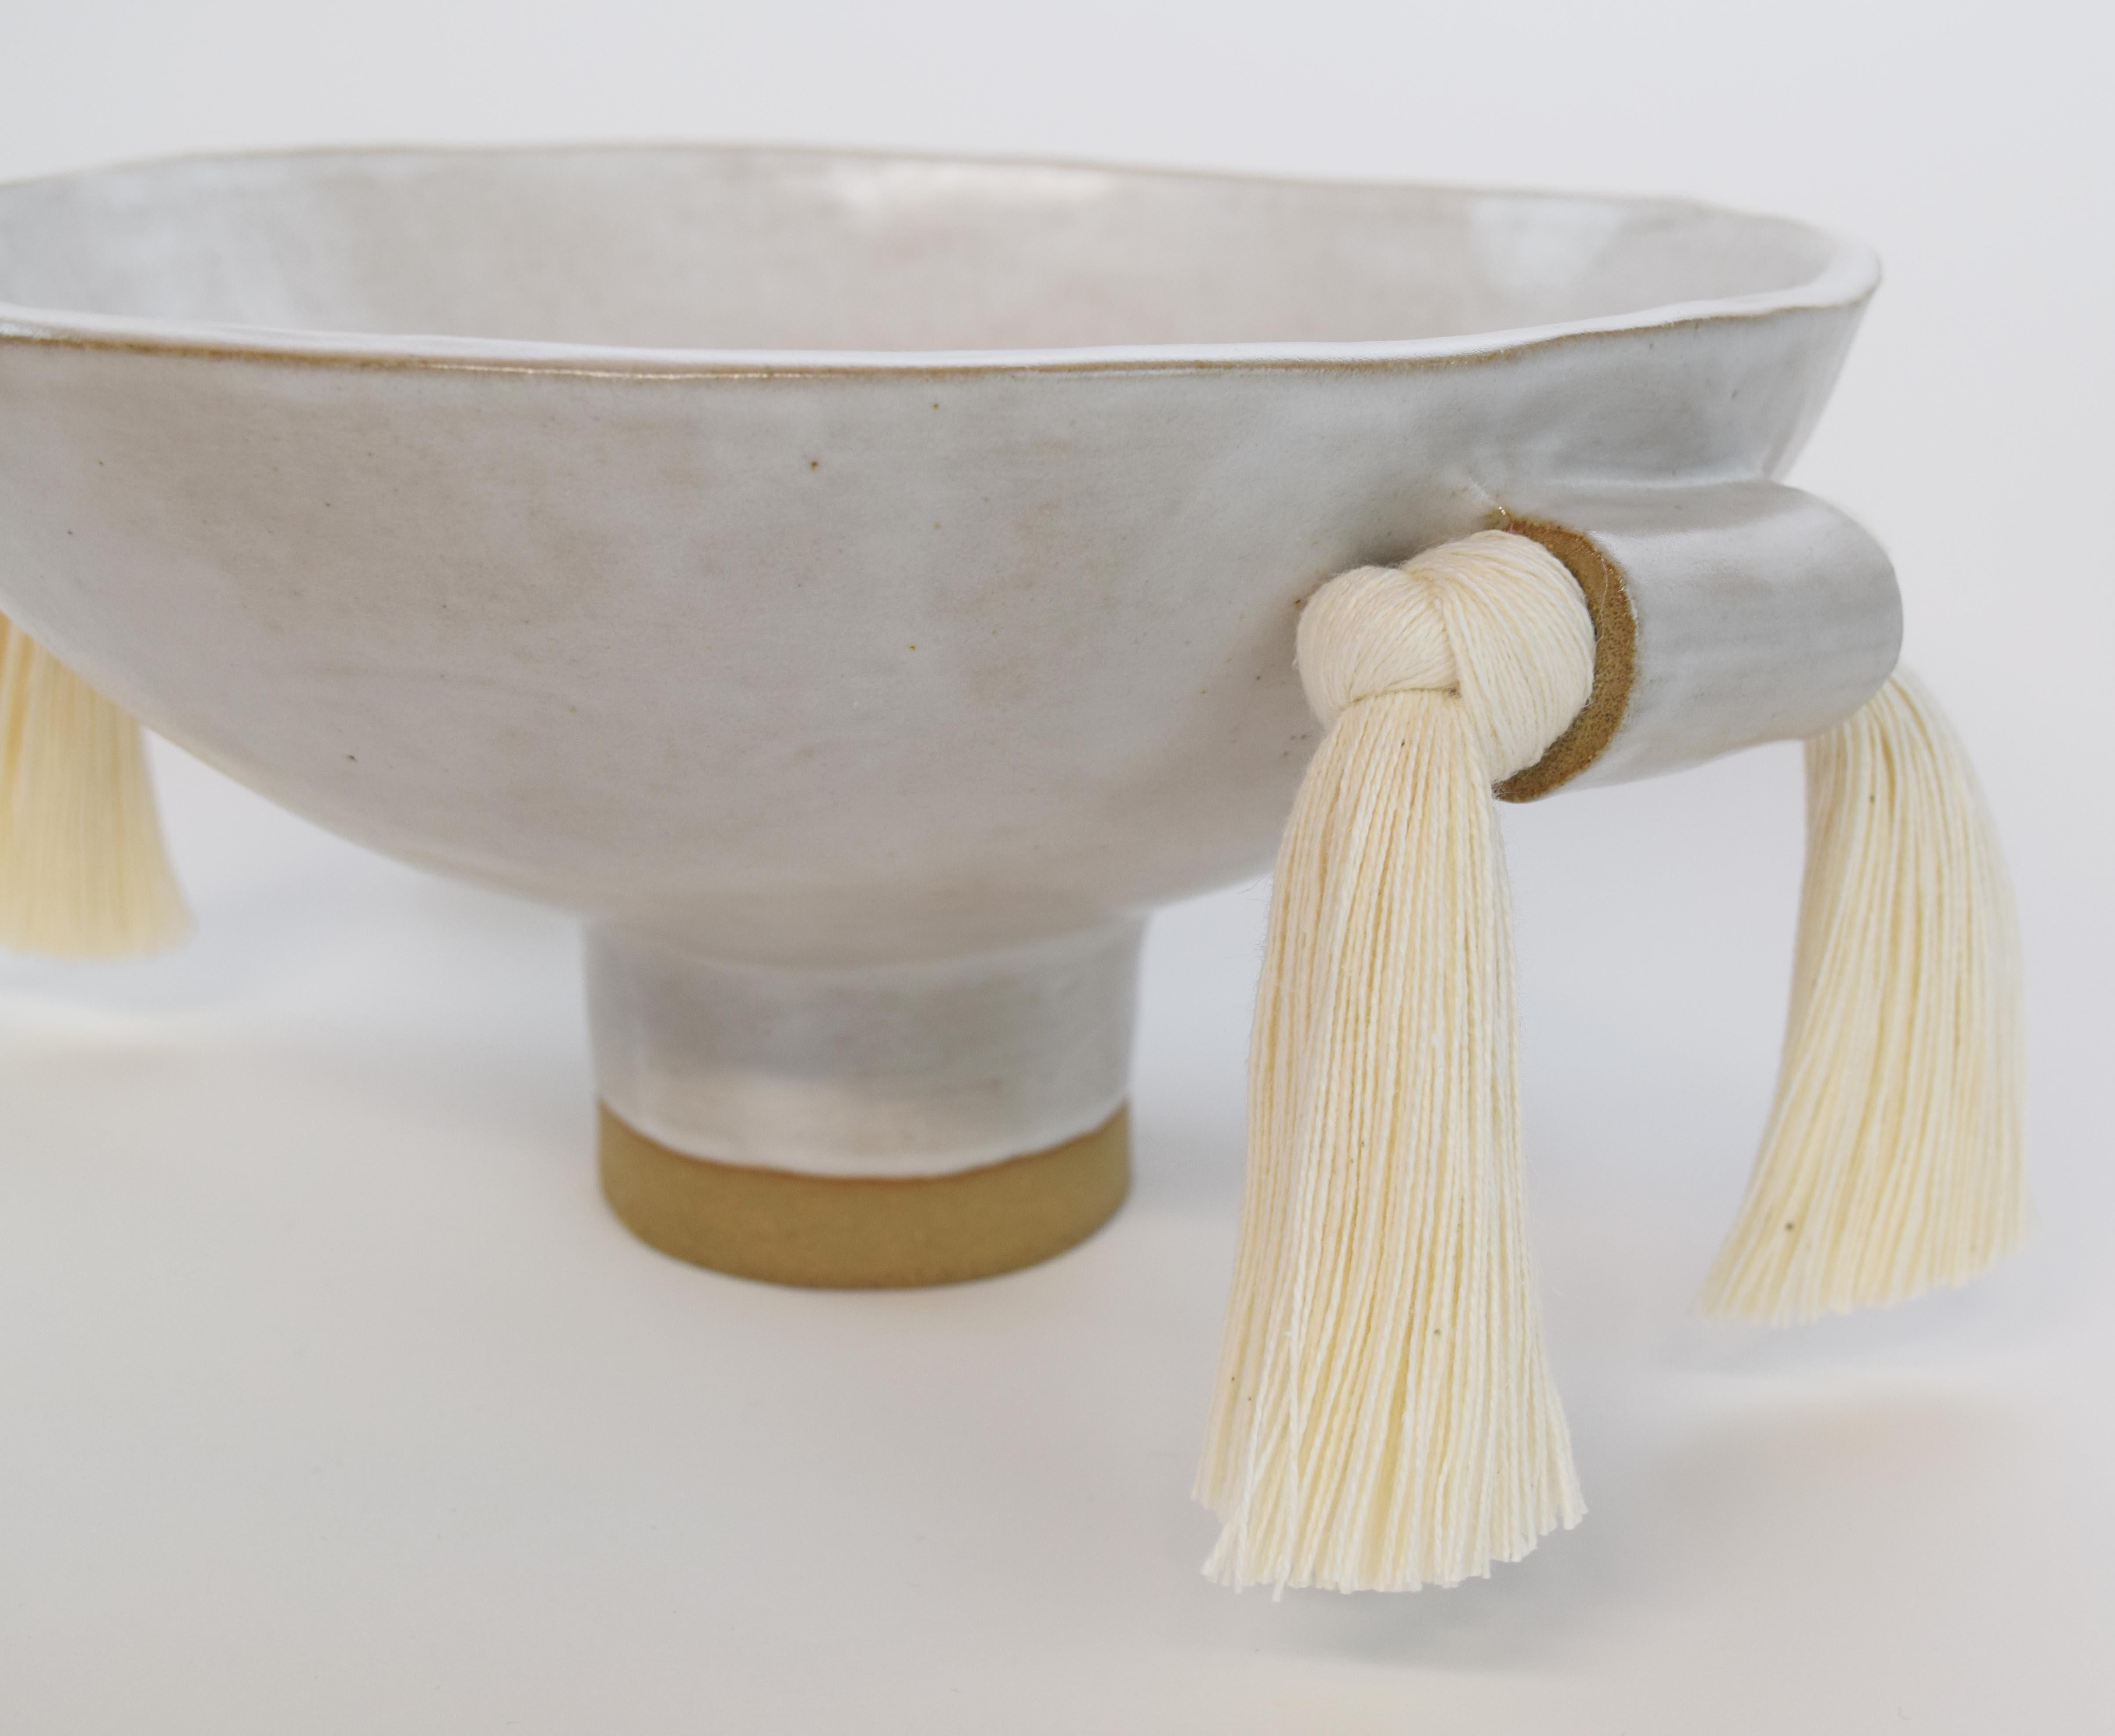 American Decorative Ceramic Bowl #697 in White with White Cotton Fringe